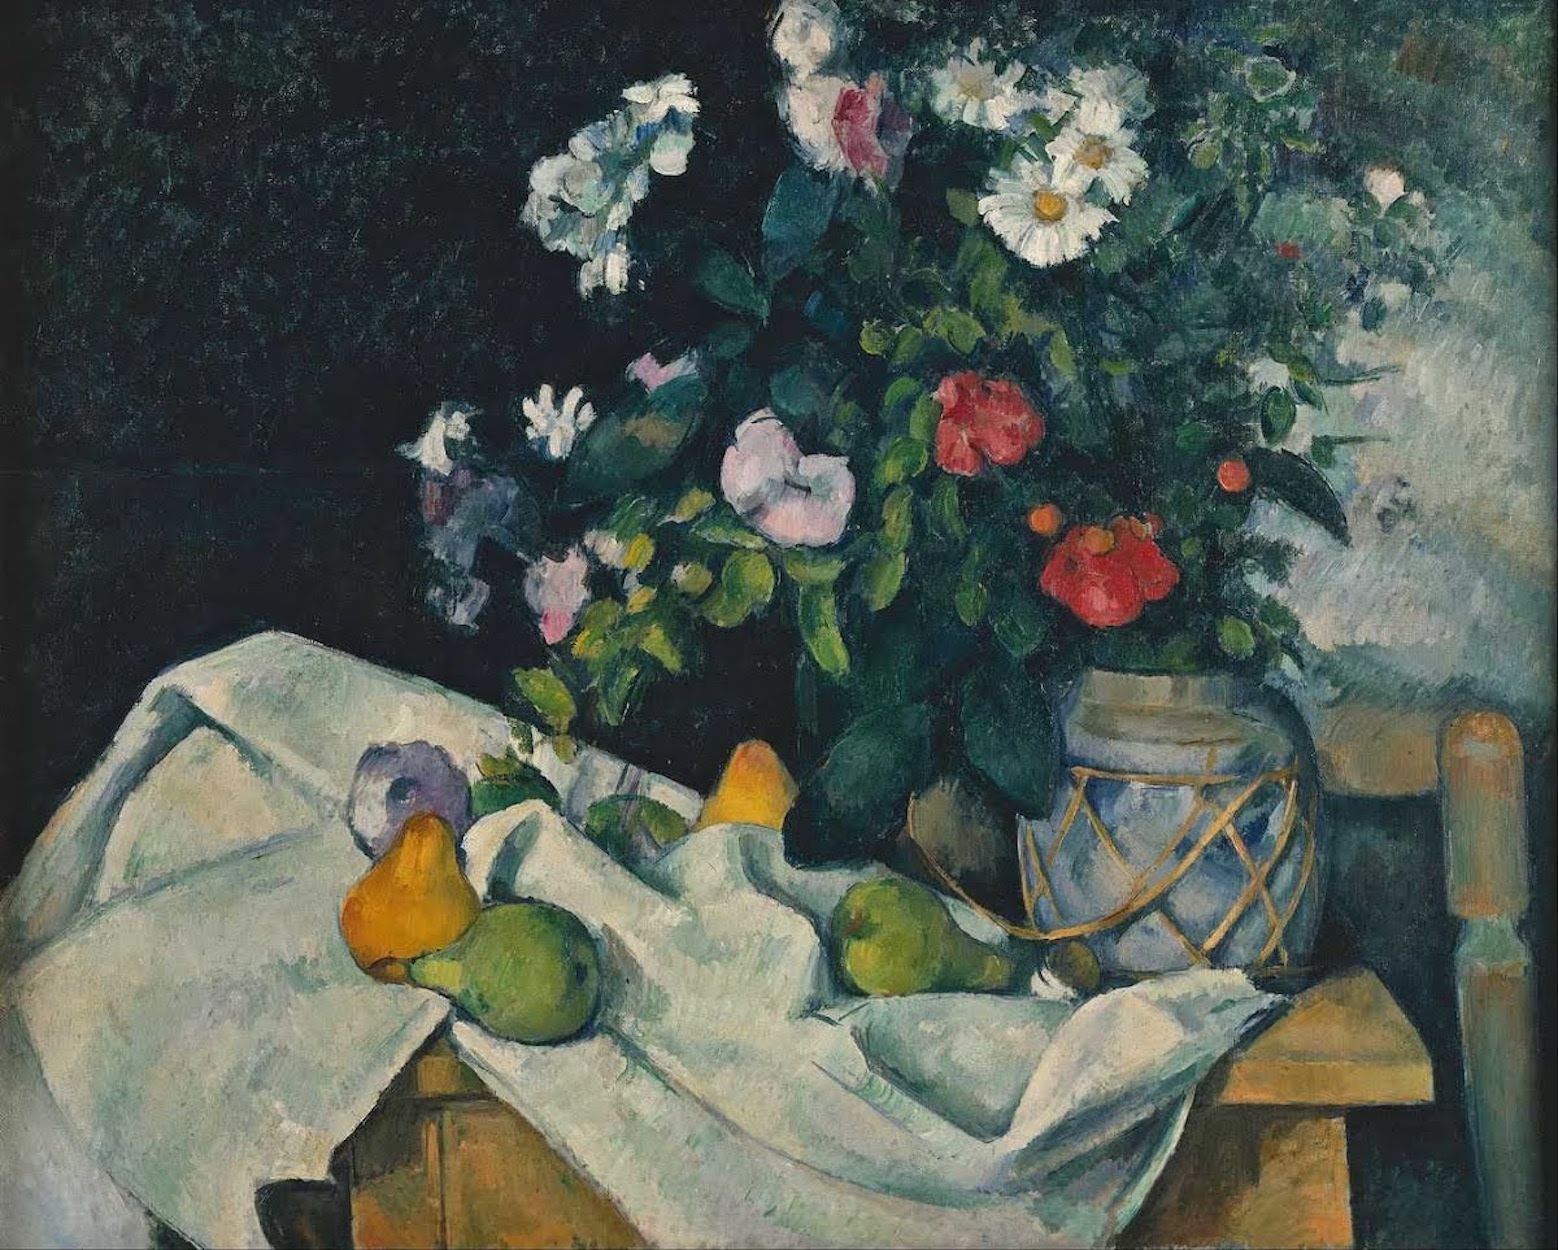 Stilleven met bloemen en fruit by Paul Cézanne - circa 1890 - 82 x 65,5 cm Alte Nationalgalerie